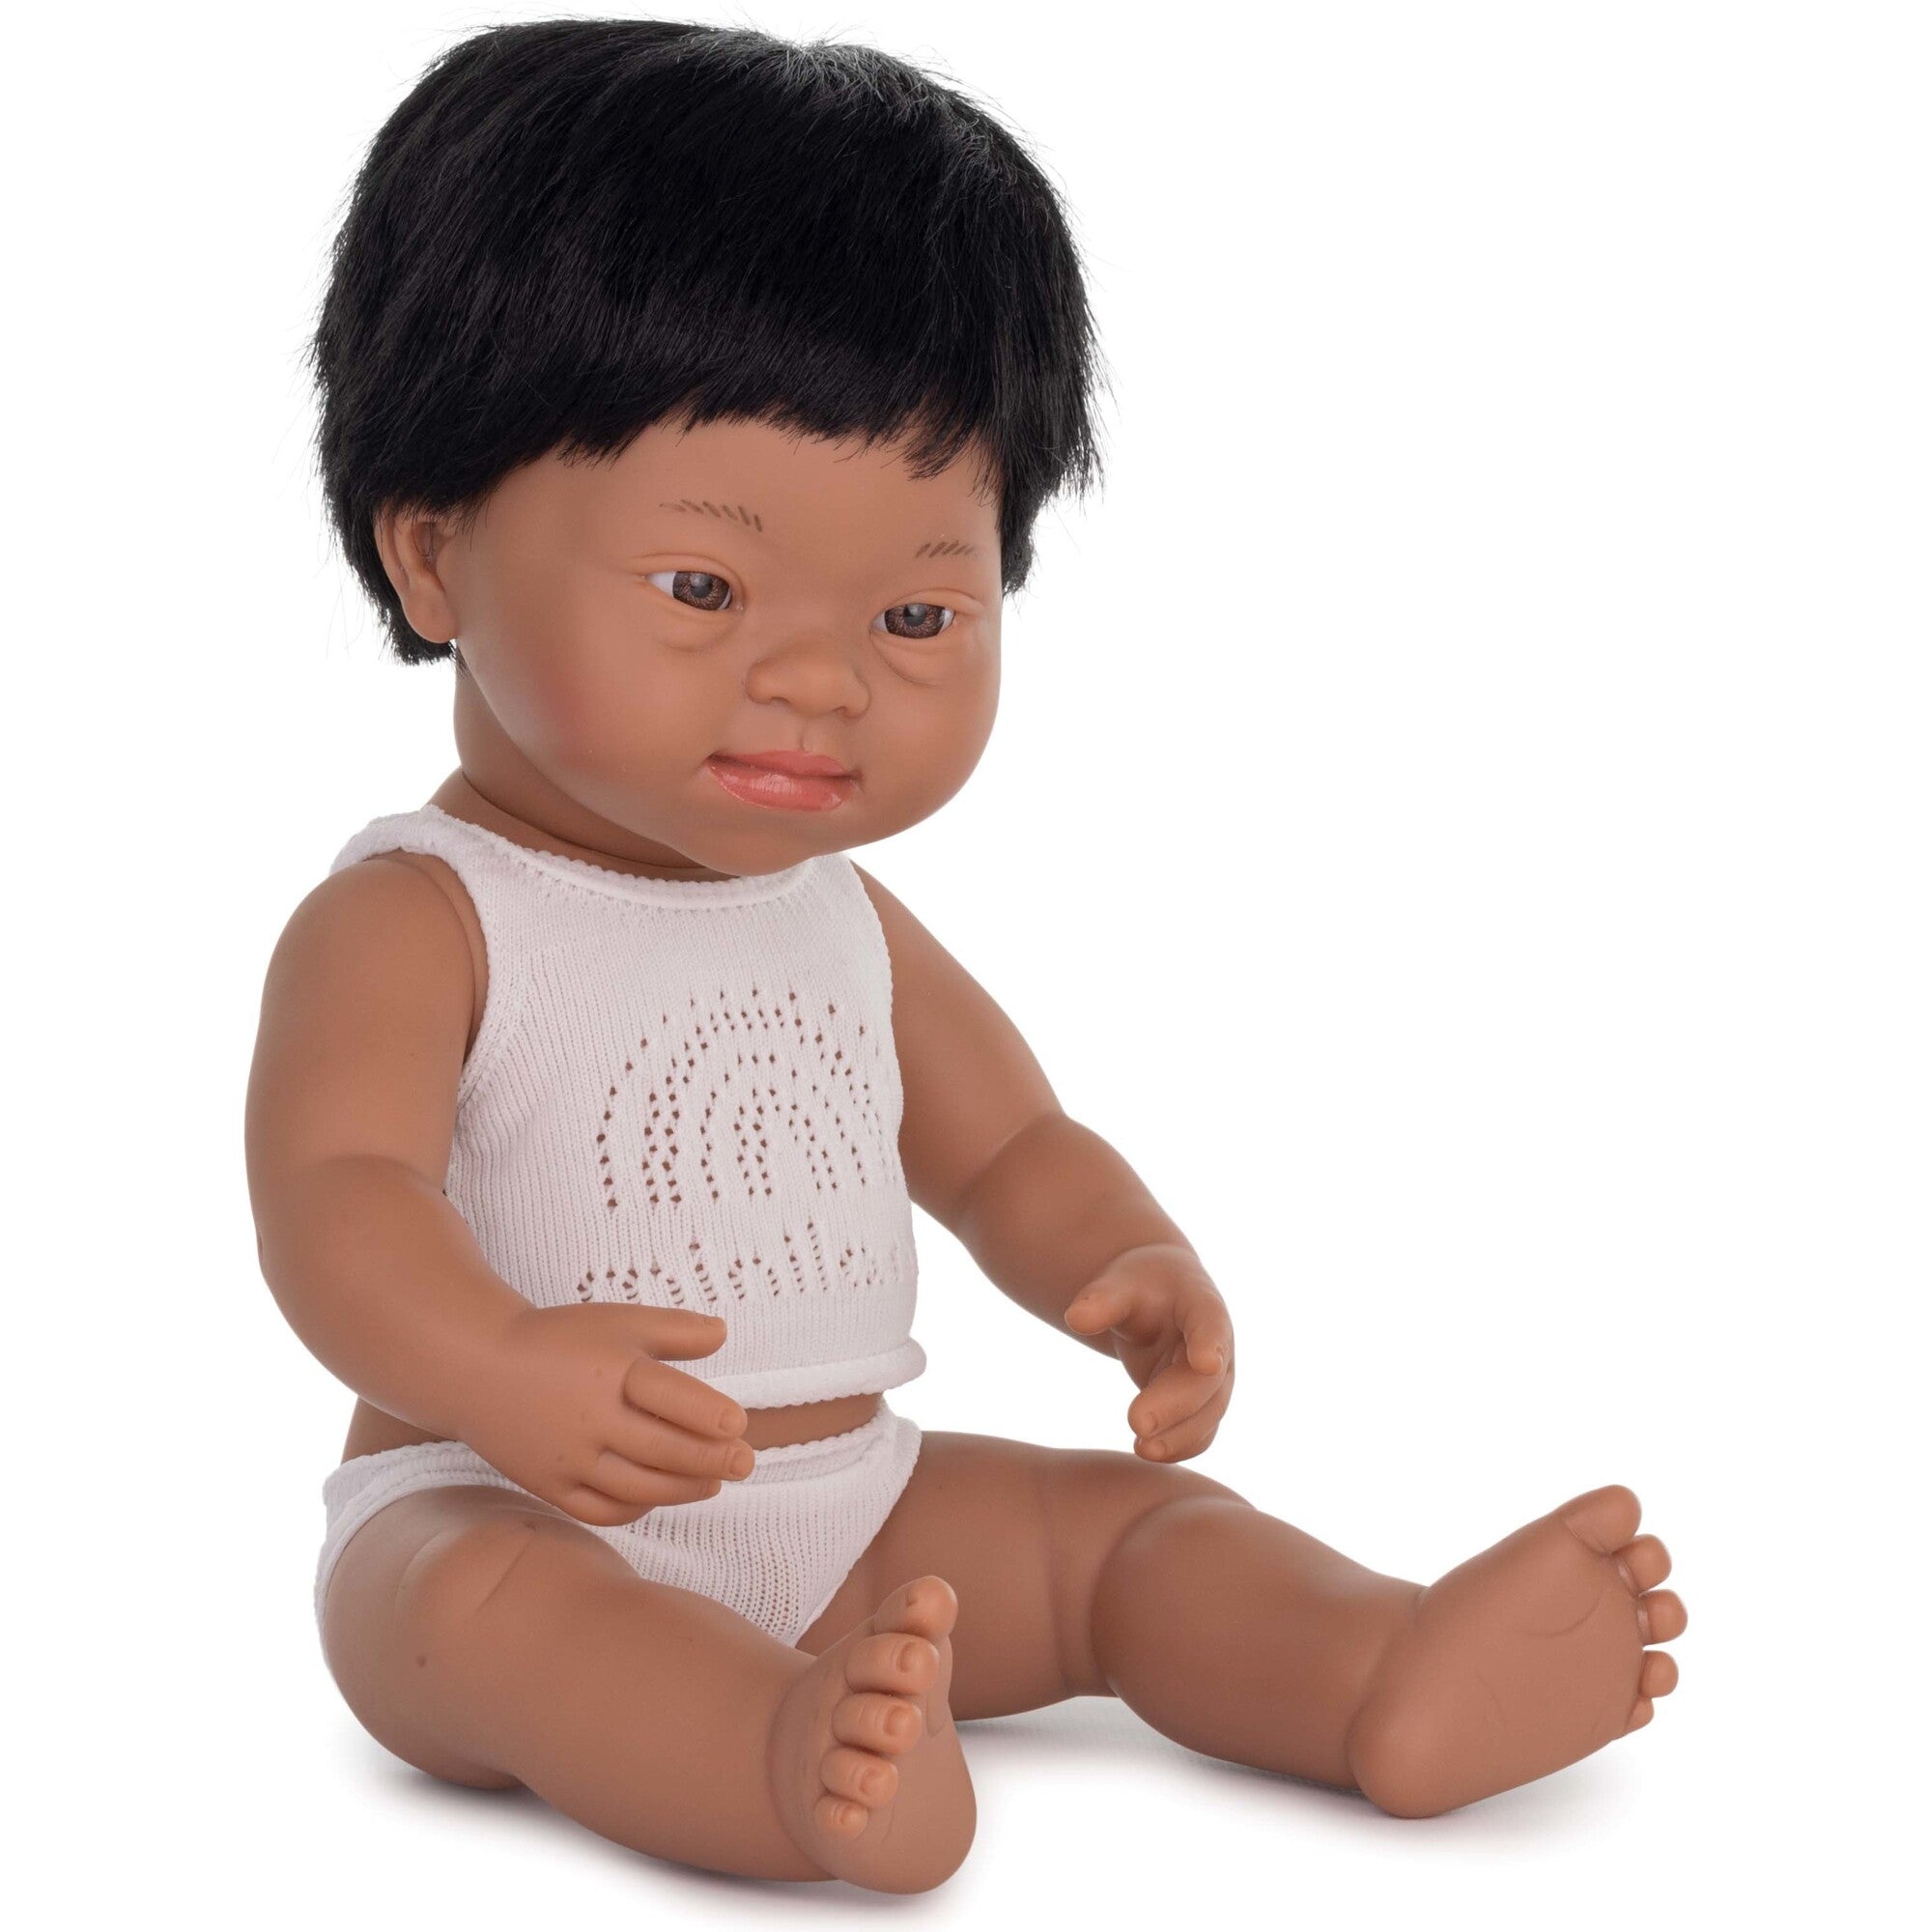 Miniland Baby Doll Hispanic Boy with Down Syndrome 15" Dolls